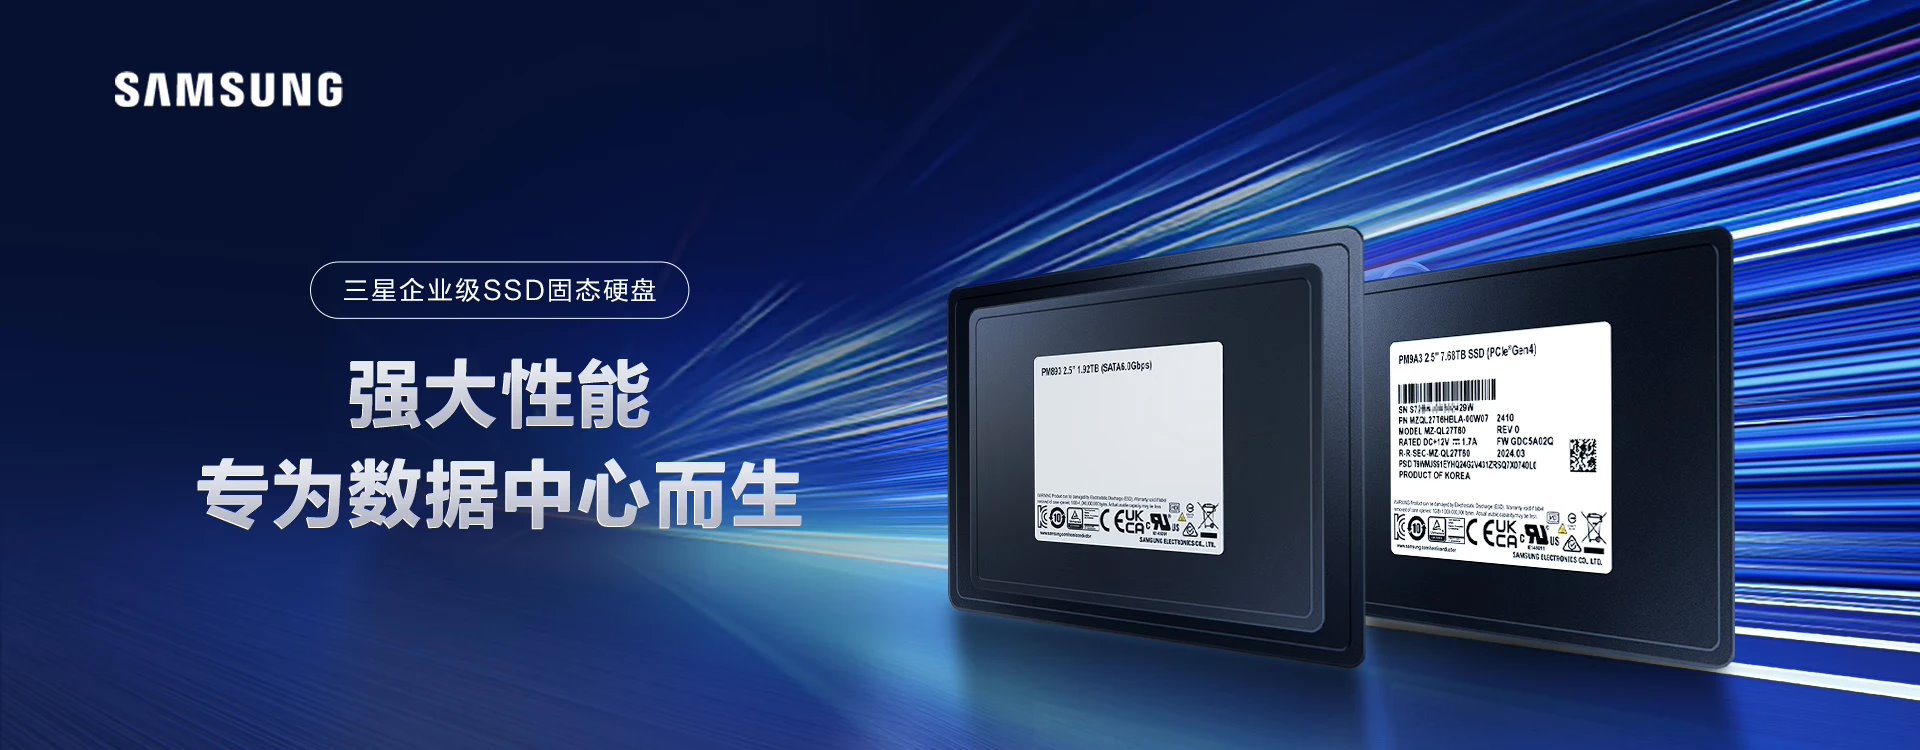 Samsung introduces 2.5-inch enterprise-class SSD